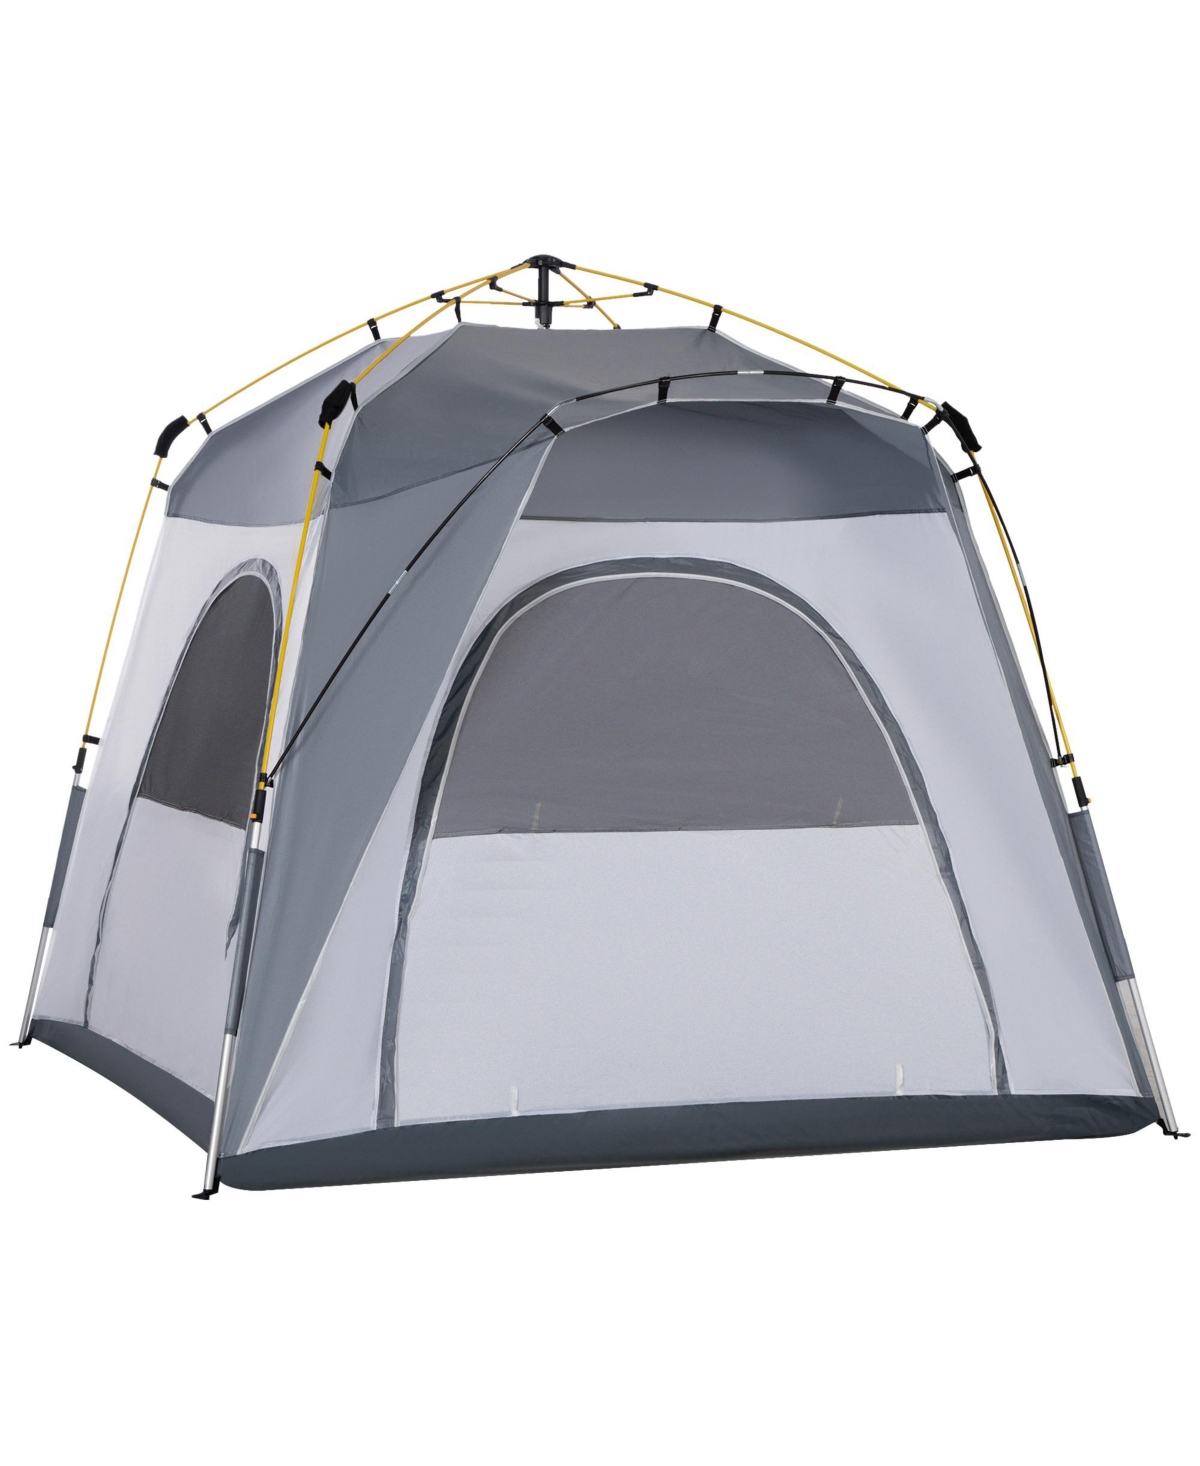 Camping Tents 4 Person Pop Up Tent w/ Windows, Doors, Grey - Grey